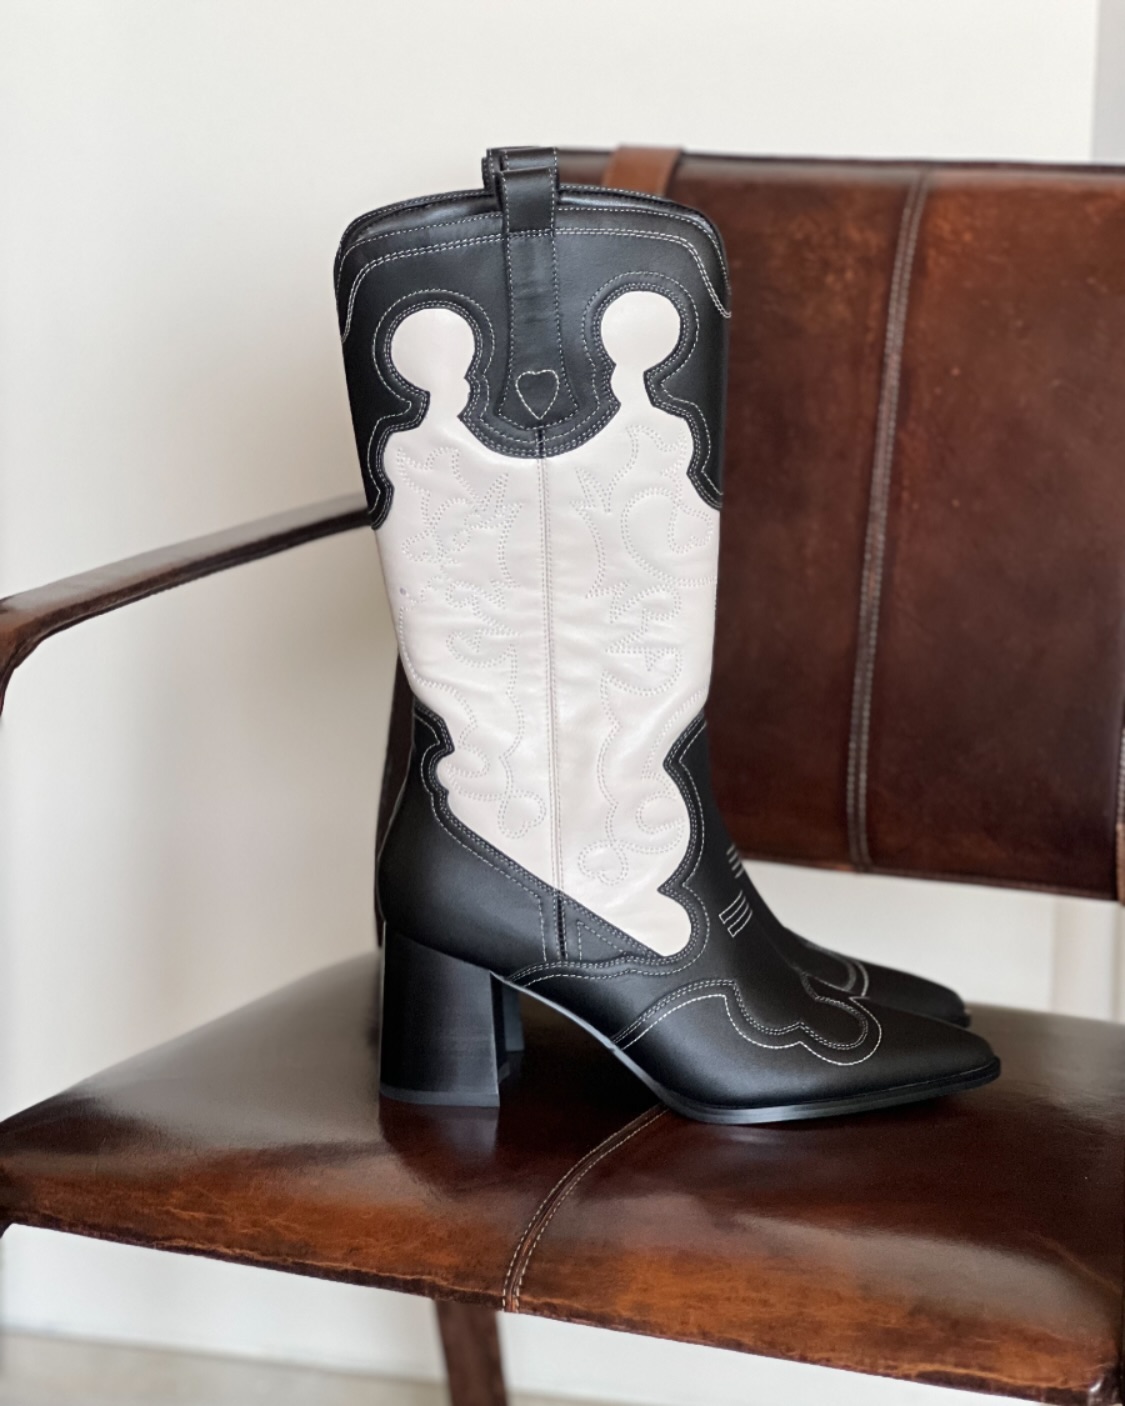 Winter Final #SALE X #KAI Cowboy Boots 🤍🖤
עכשיו במחיר מיוחד בחנויות ובאתר #NineWestIsrael - בואי לראות את המגפיים מקרוב 🫶🏻